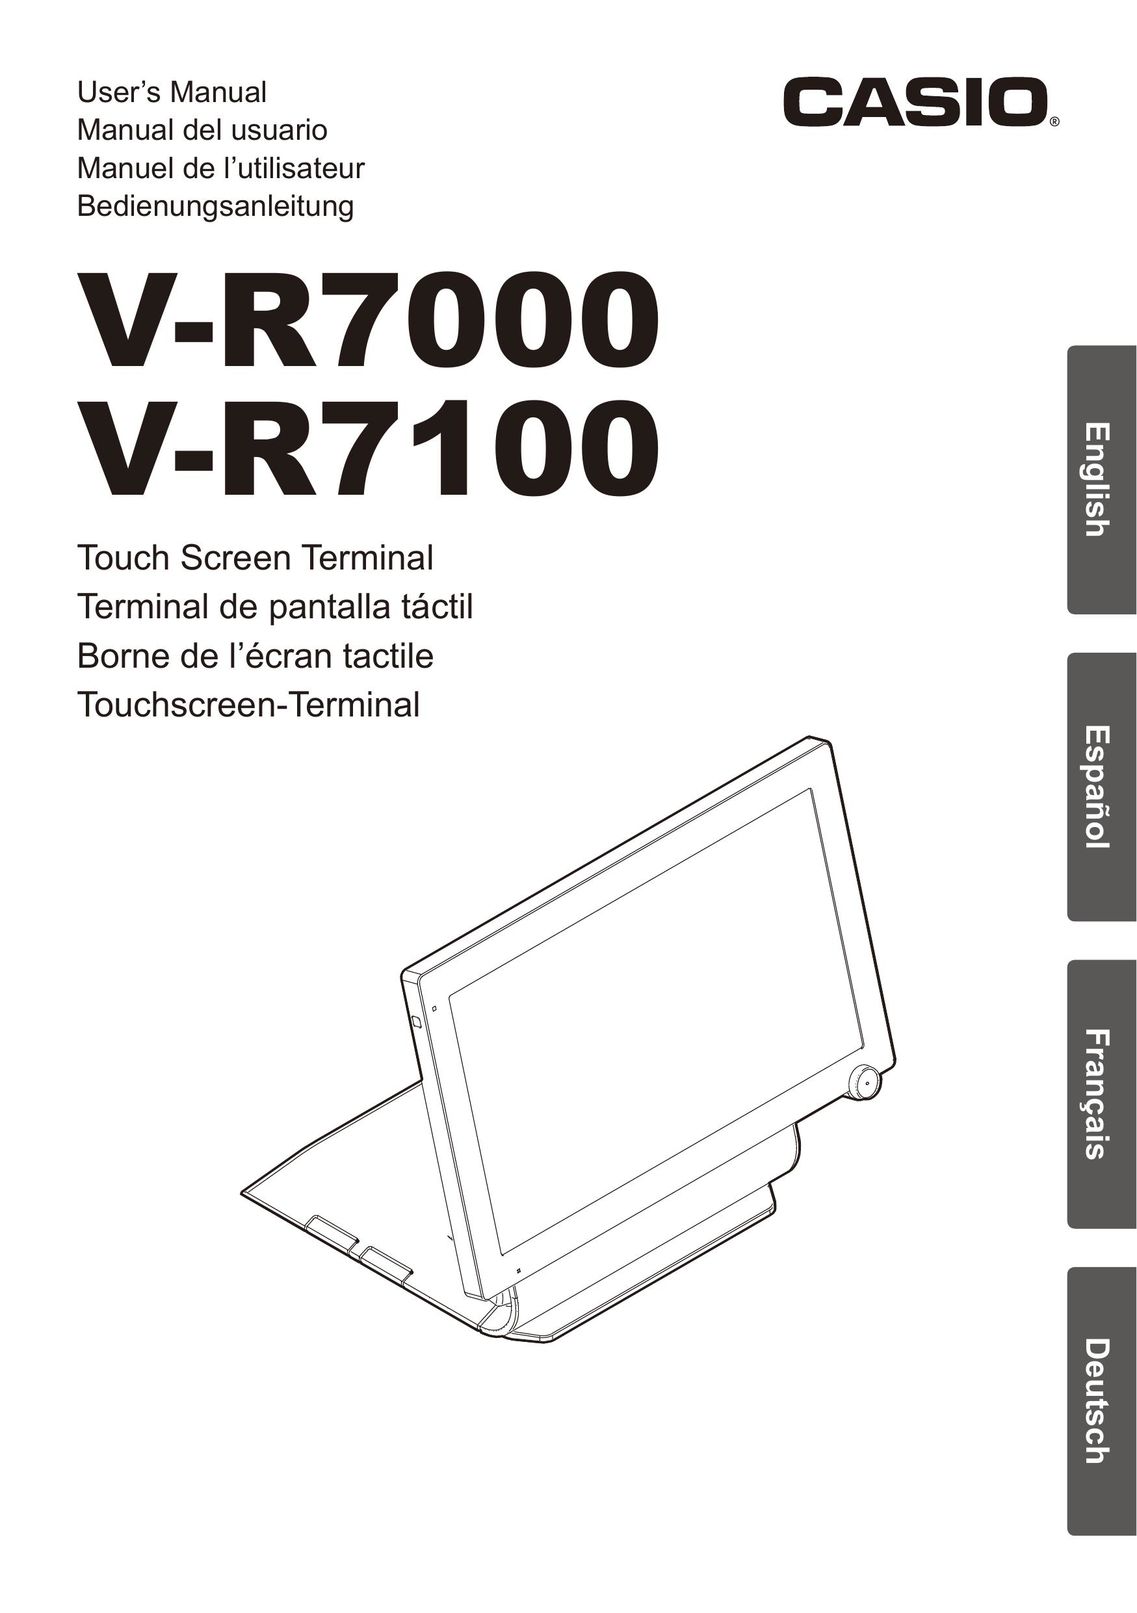 Casio V-R7100 Car Video System User Manual